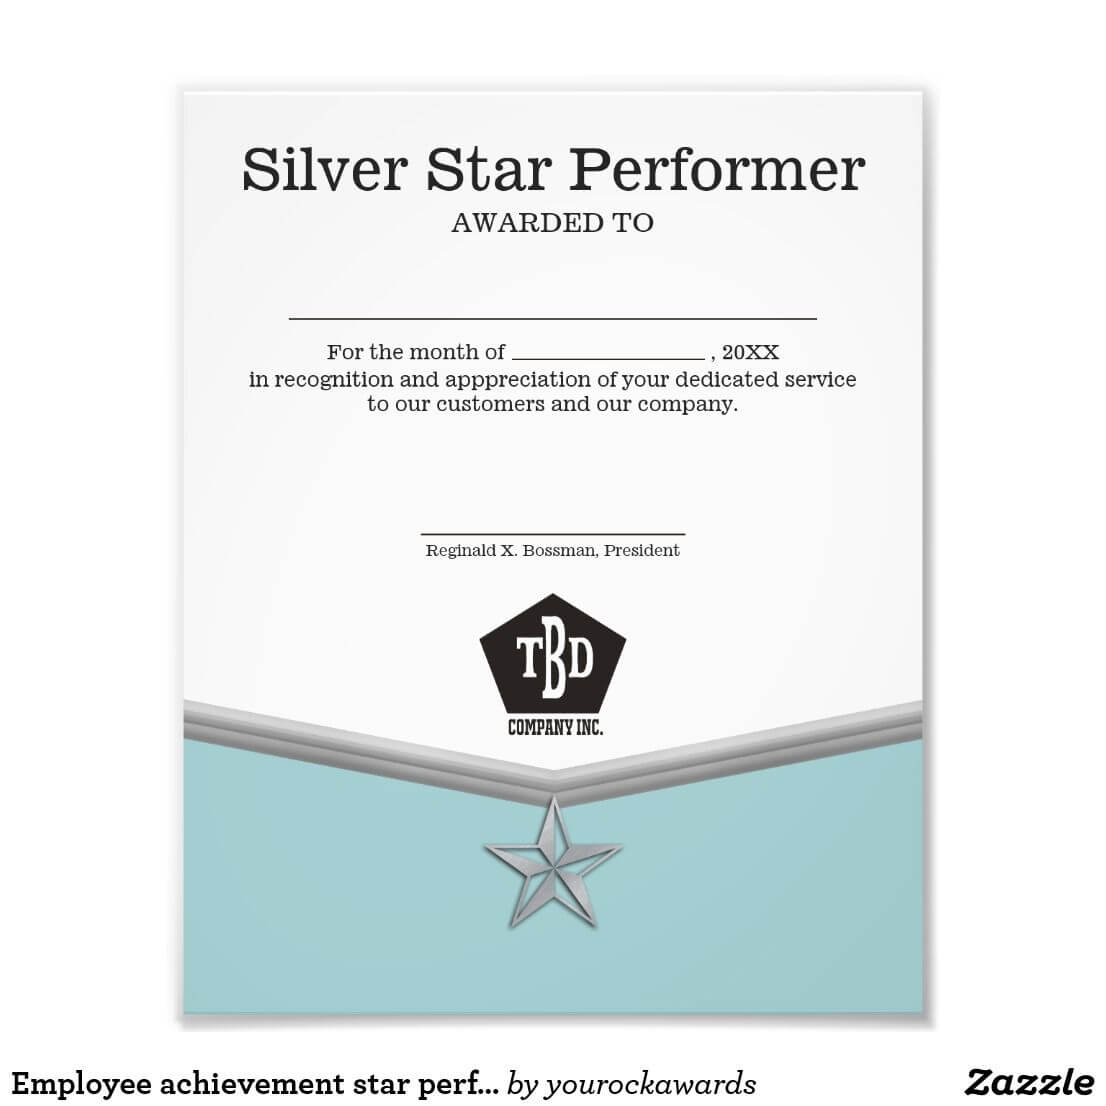 Employee Achievement Star Performer Certificate Photo Print With Star Performer Certificate Templates